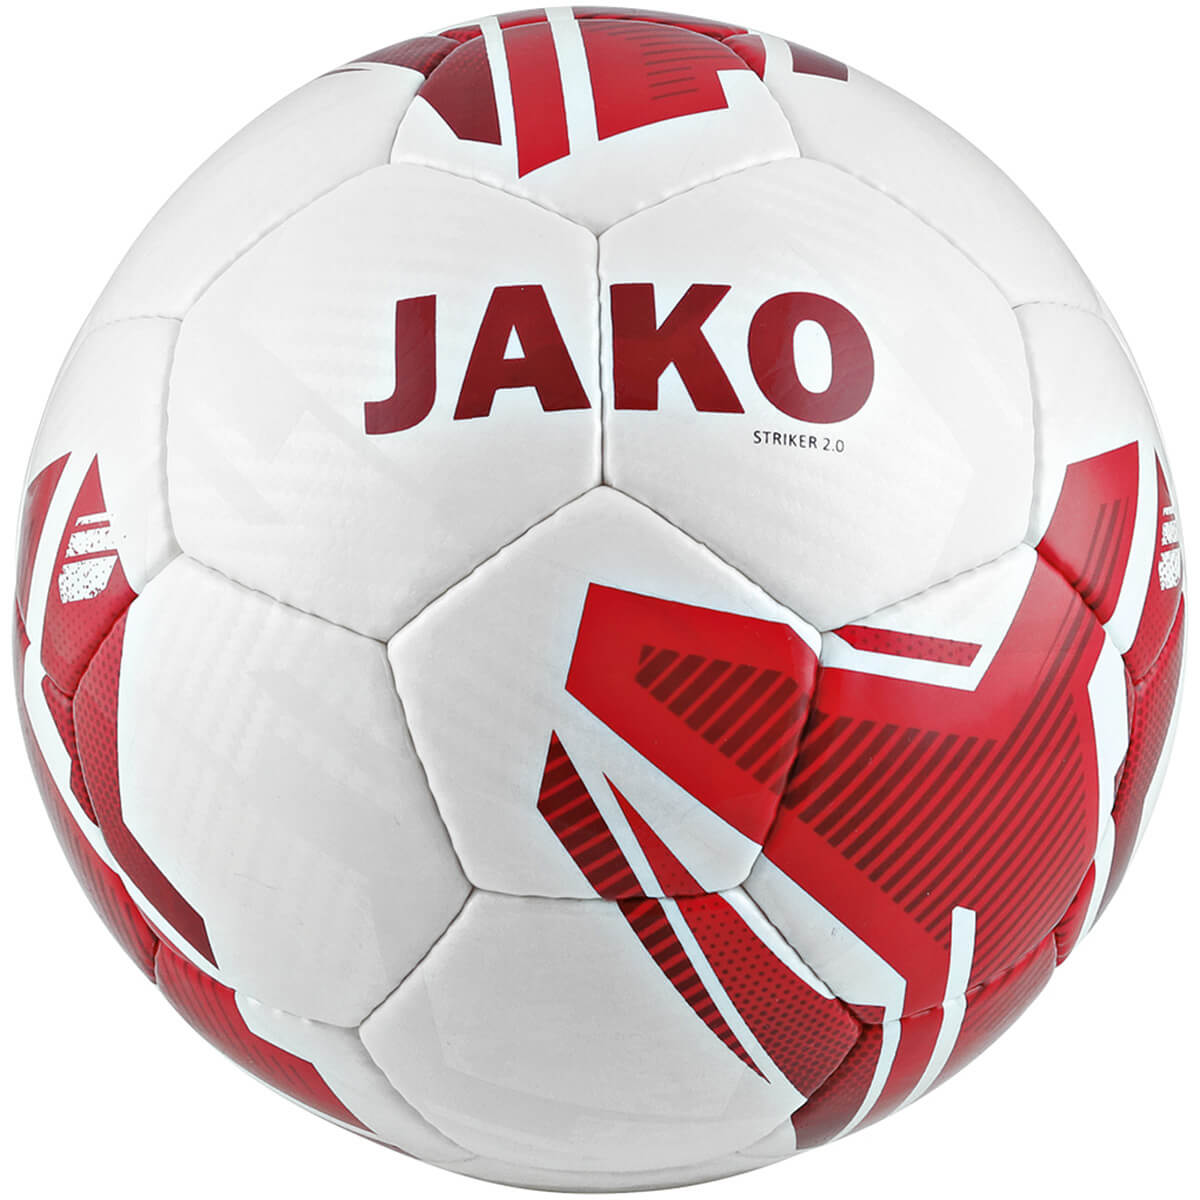 JAKO 2353-01 Ballon Entraînement Striker 2.0 Blanc/Rouge